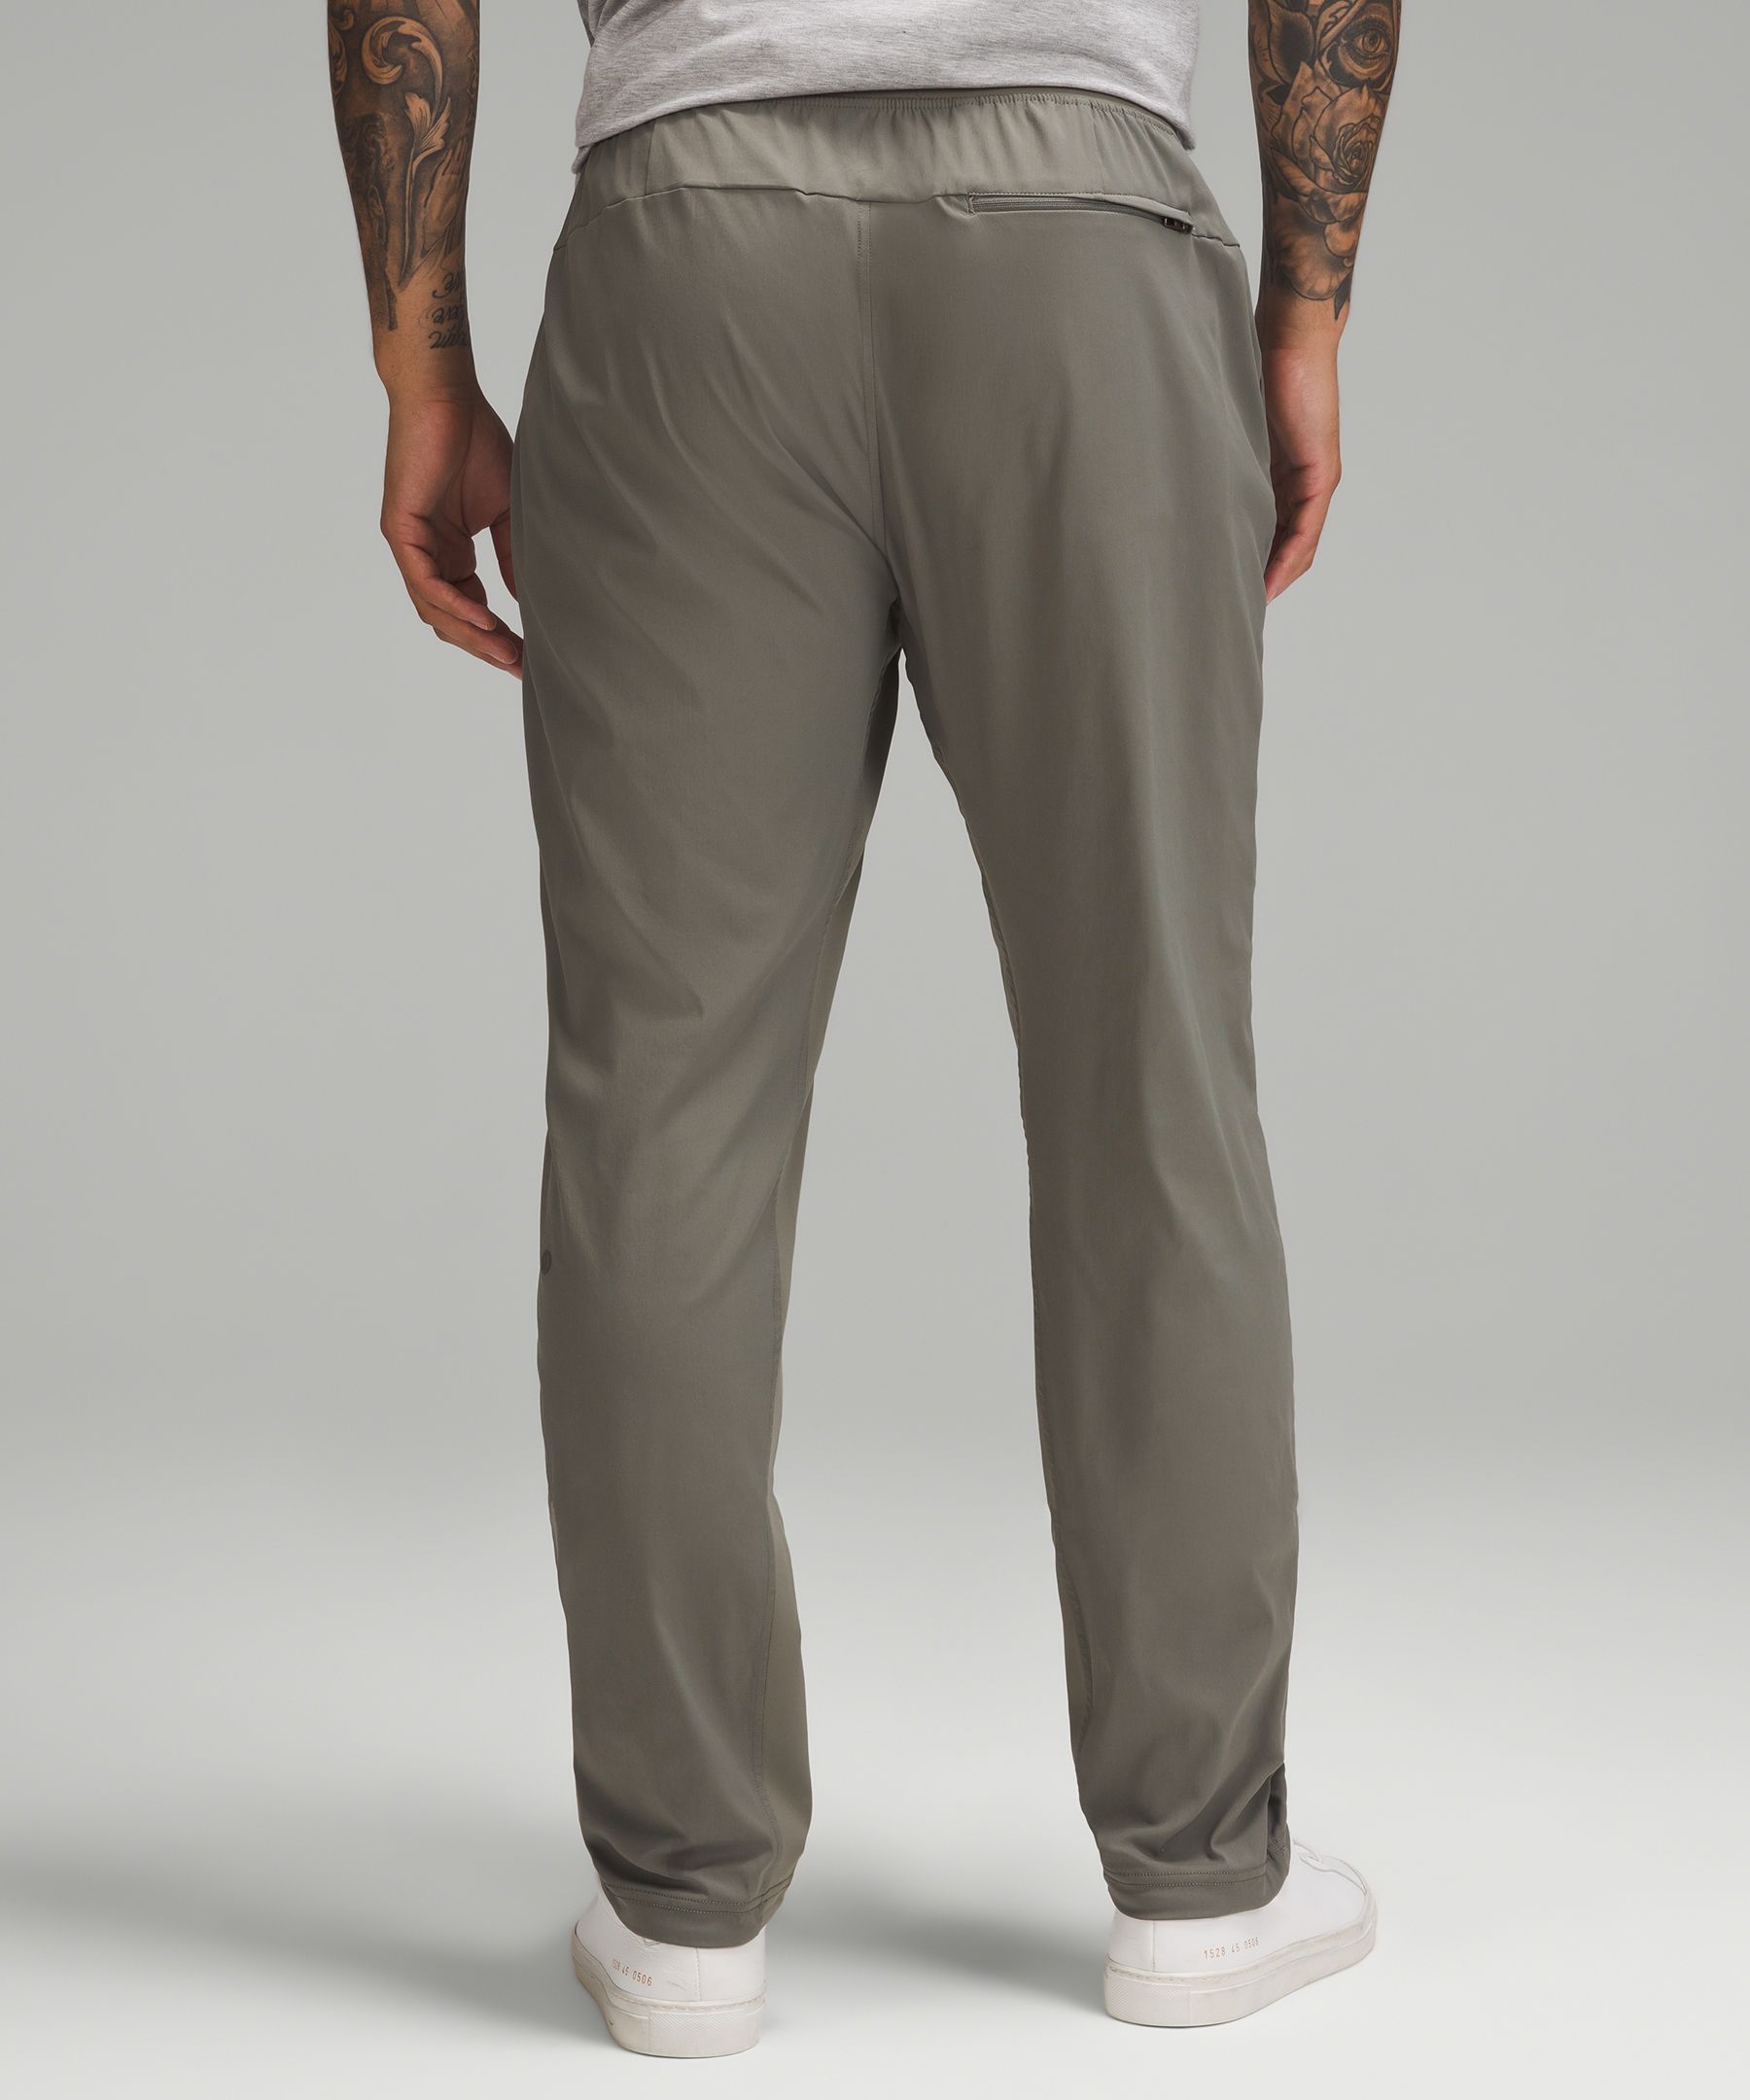 Buy the Lululemon Women Grey Athletic Pants SZ Xl